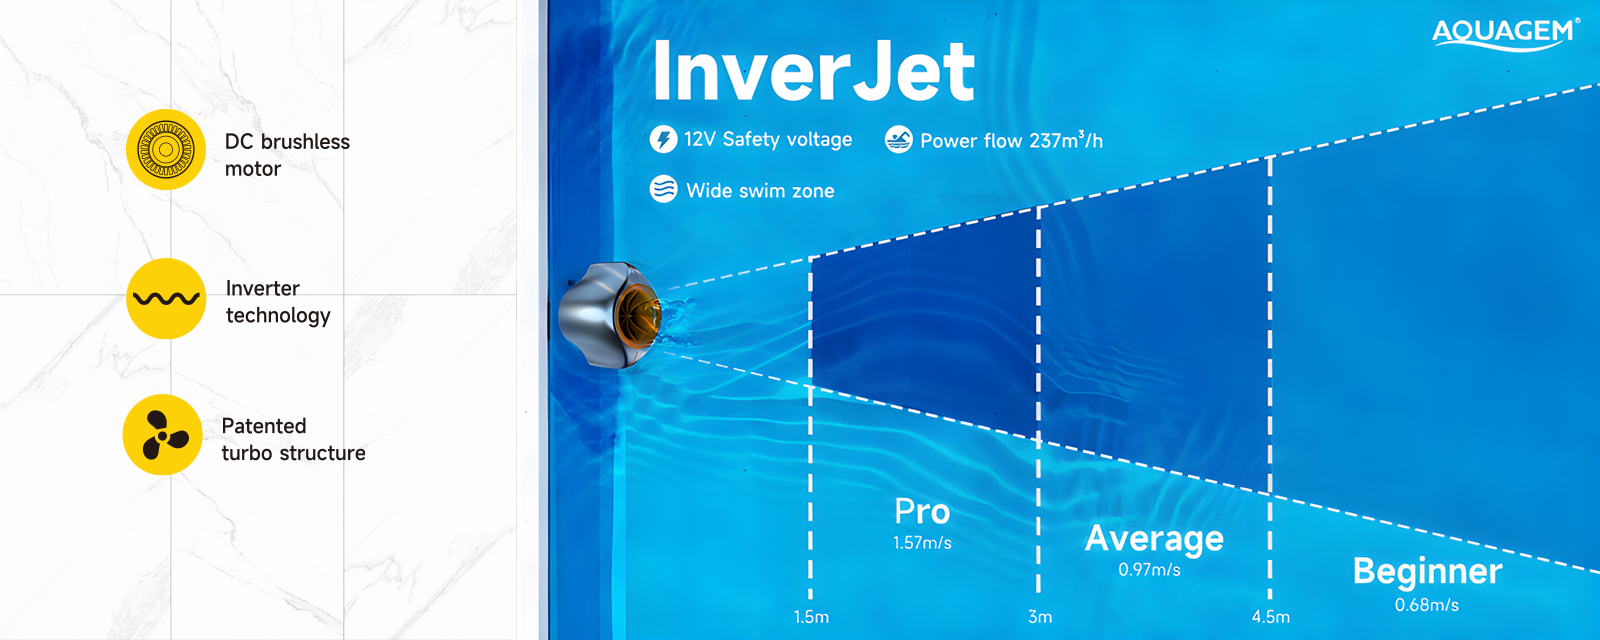 swimming Pool current machine inverjet - Powerful Flow Rate: Max. 237m³/h